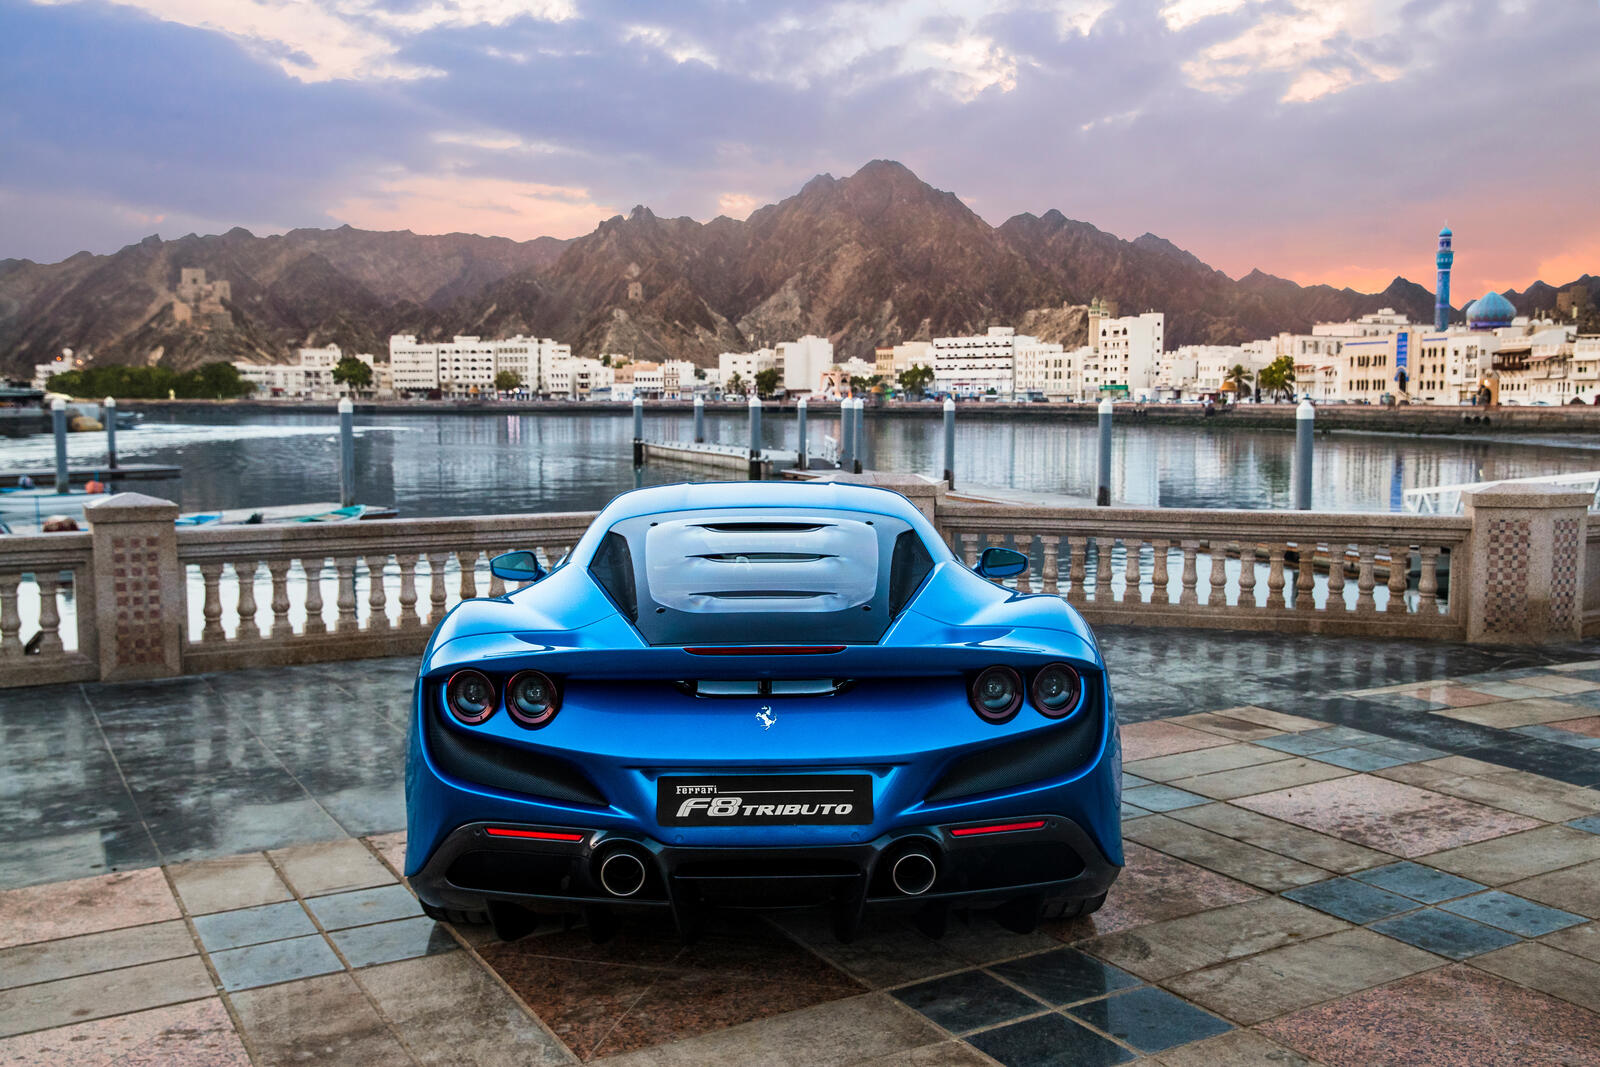 Бесплатное фото Ferrari F8 Tributo 2019 года синего цвета вид сзади на берегу моря